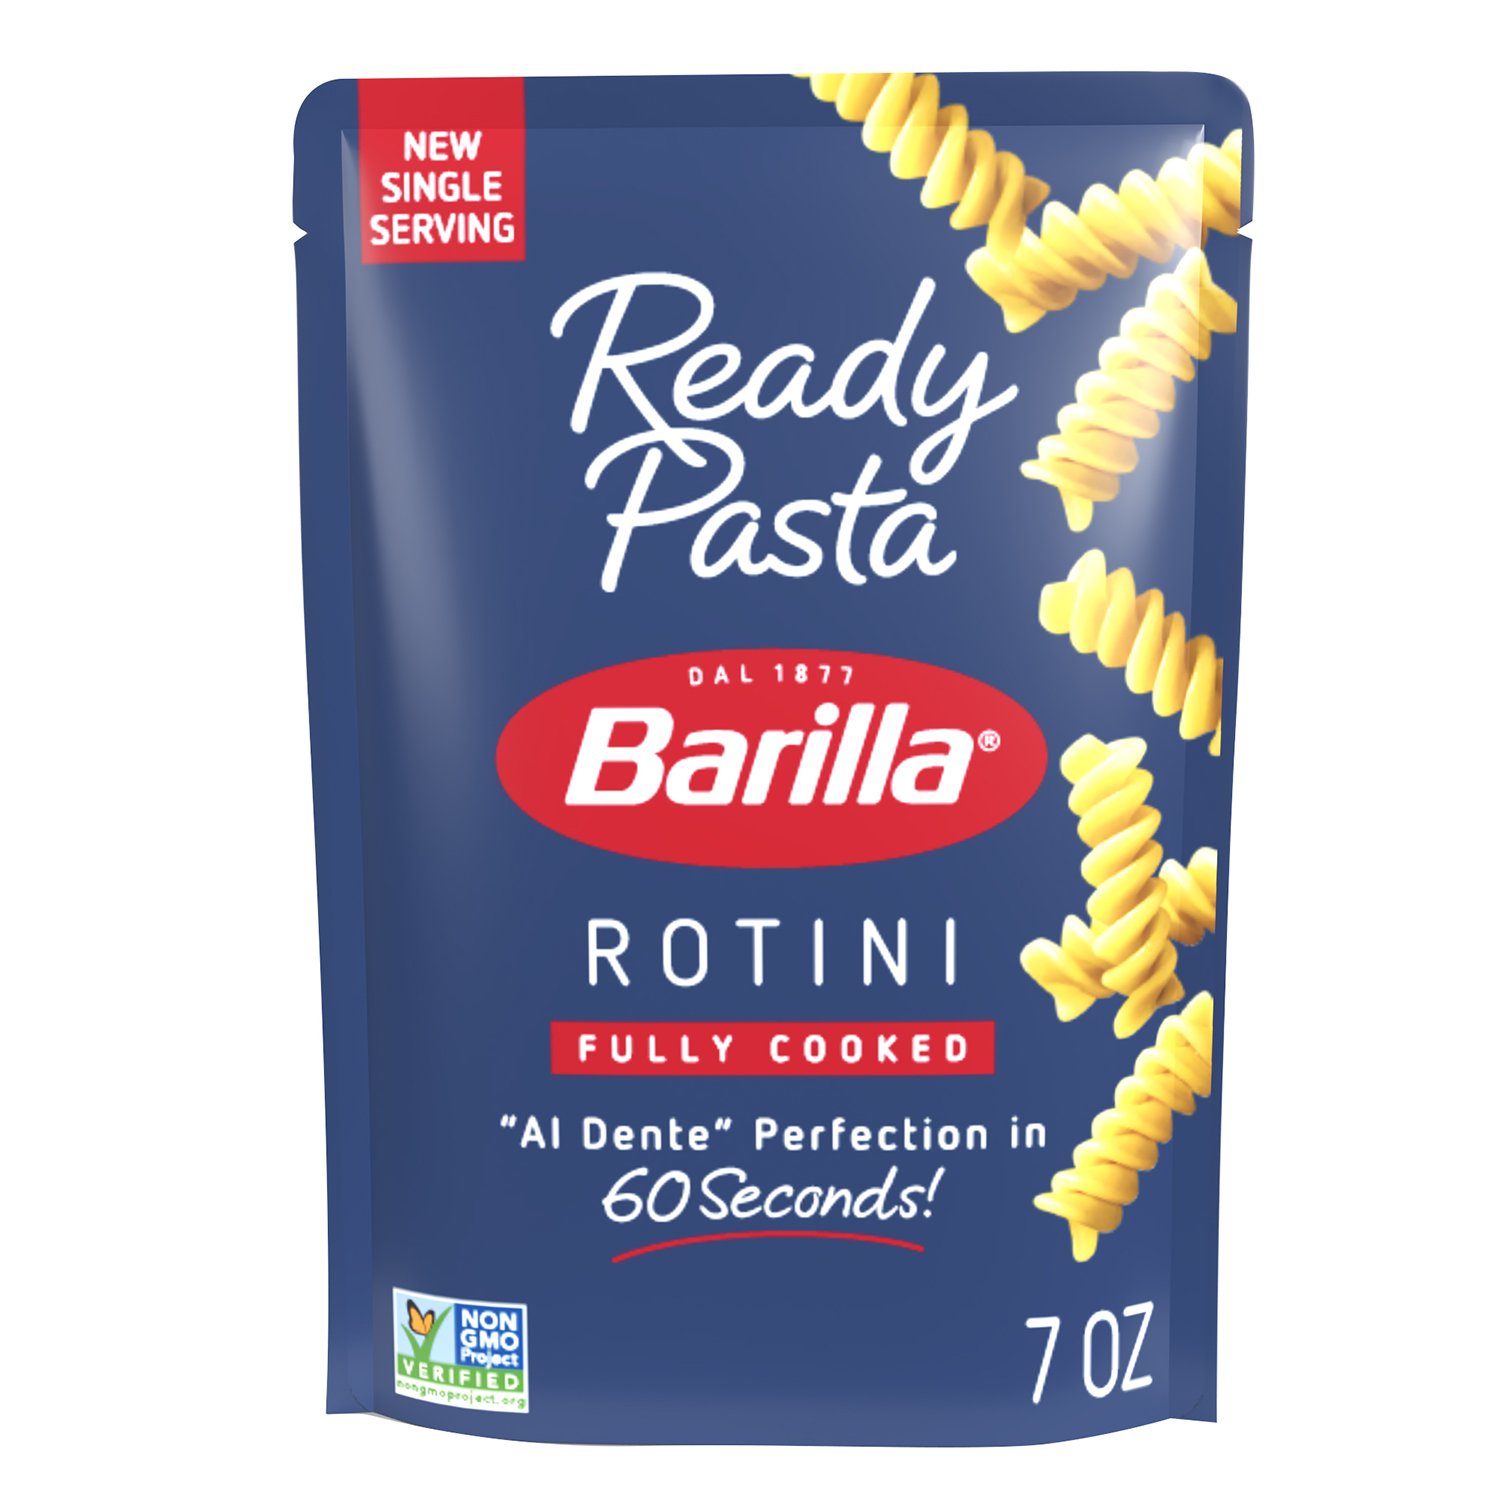 Barilla Ready Pasta Pasta - H-E-B Rotini at Shop